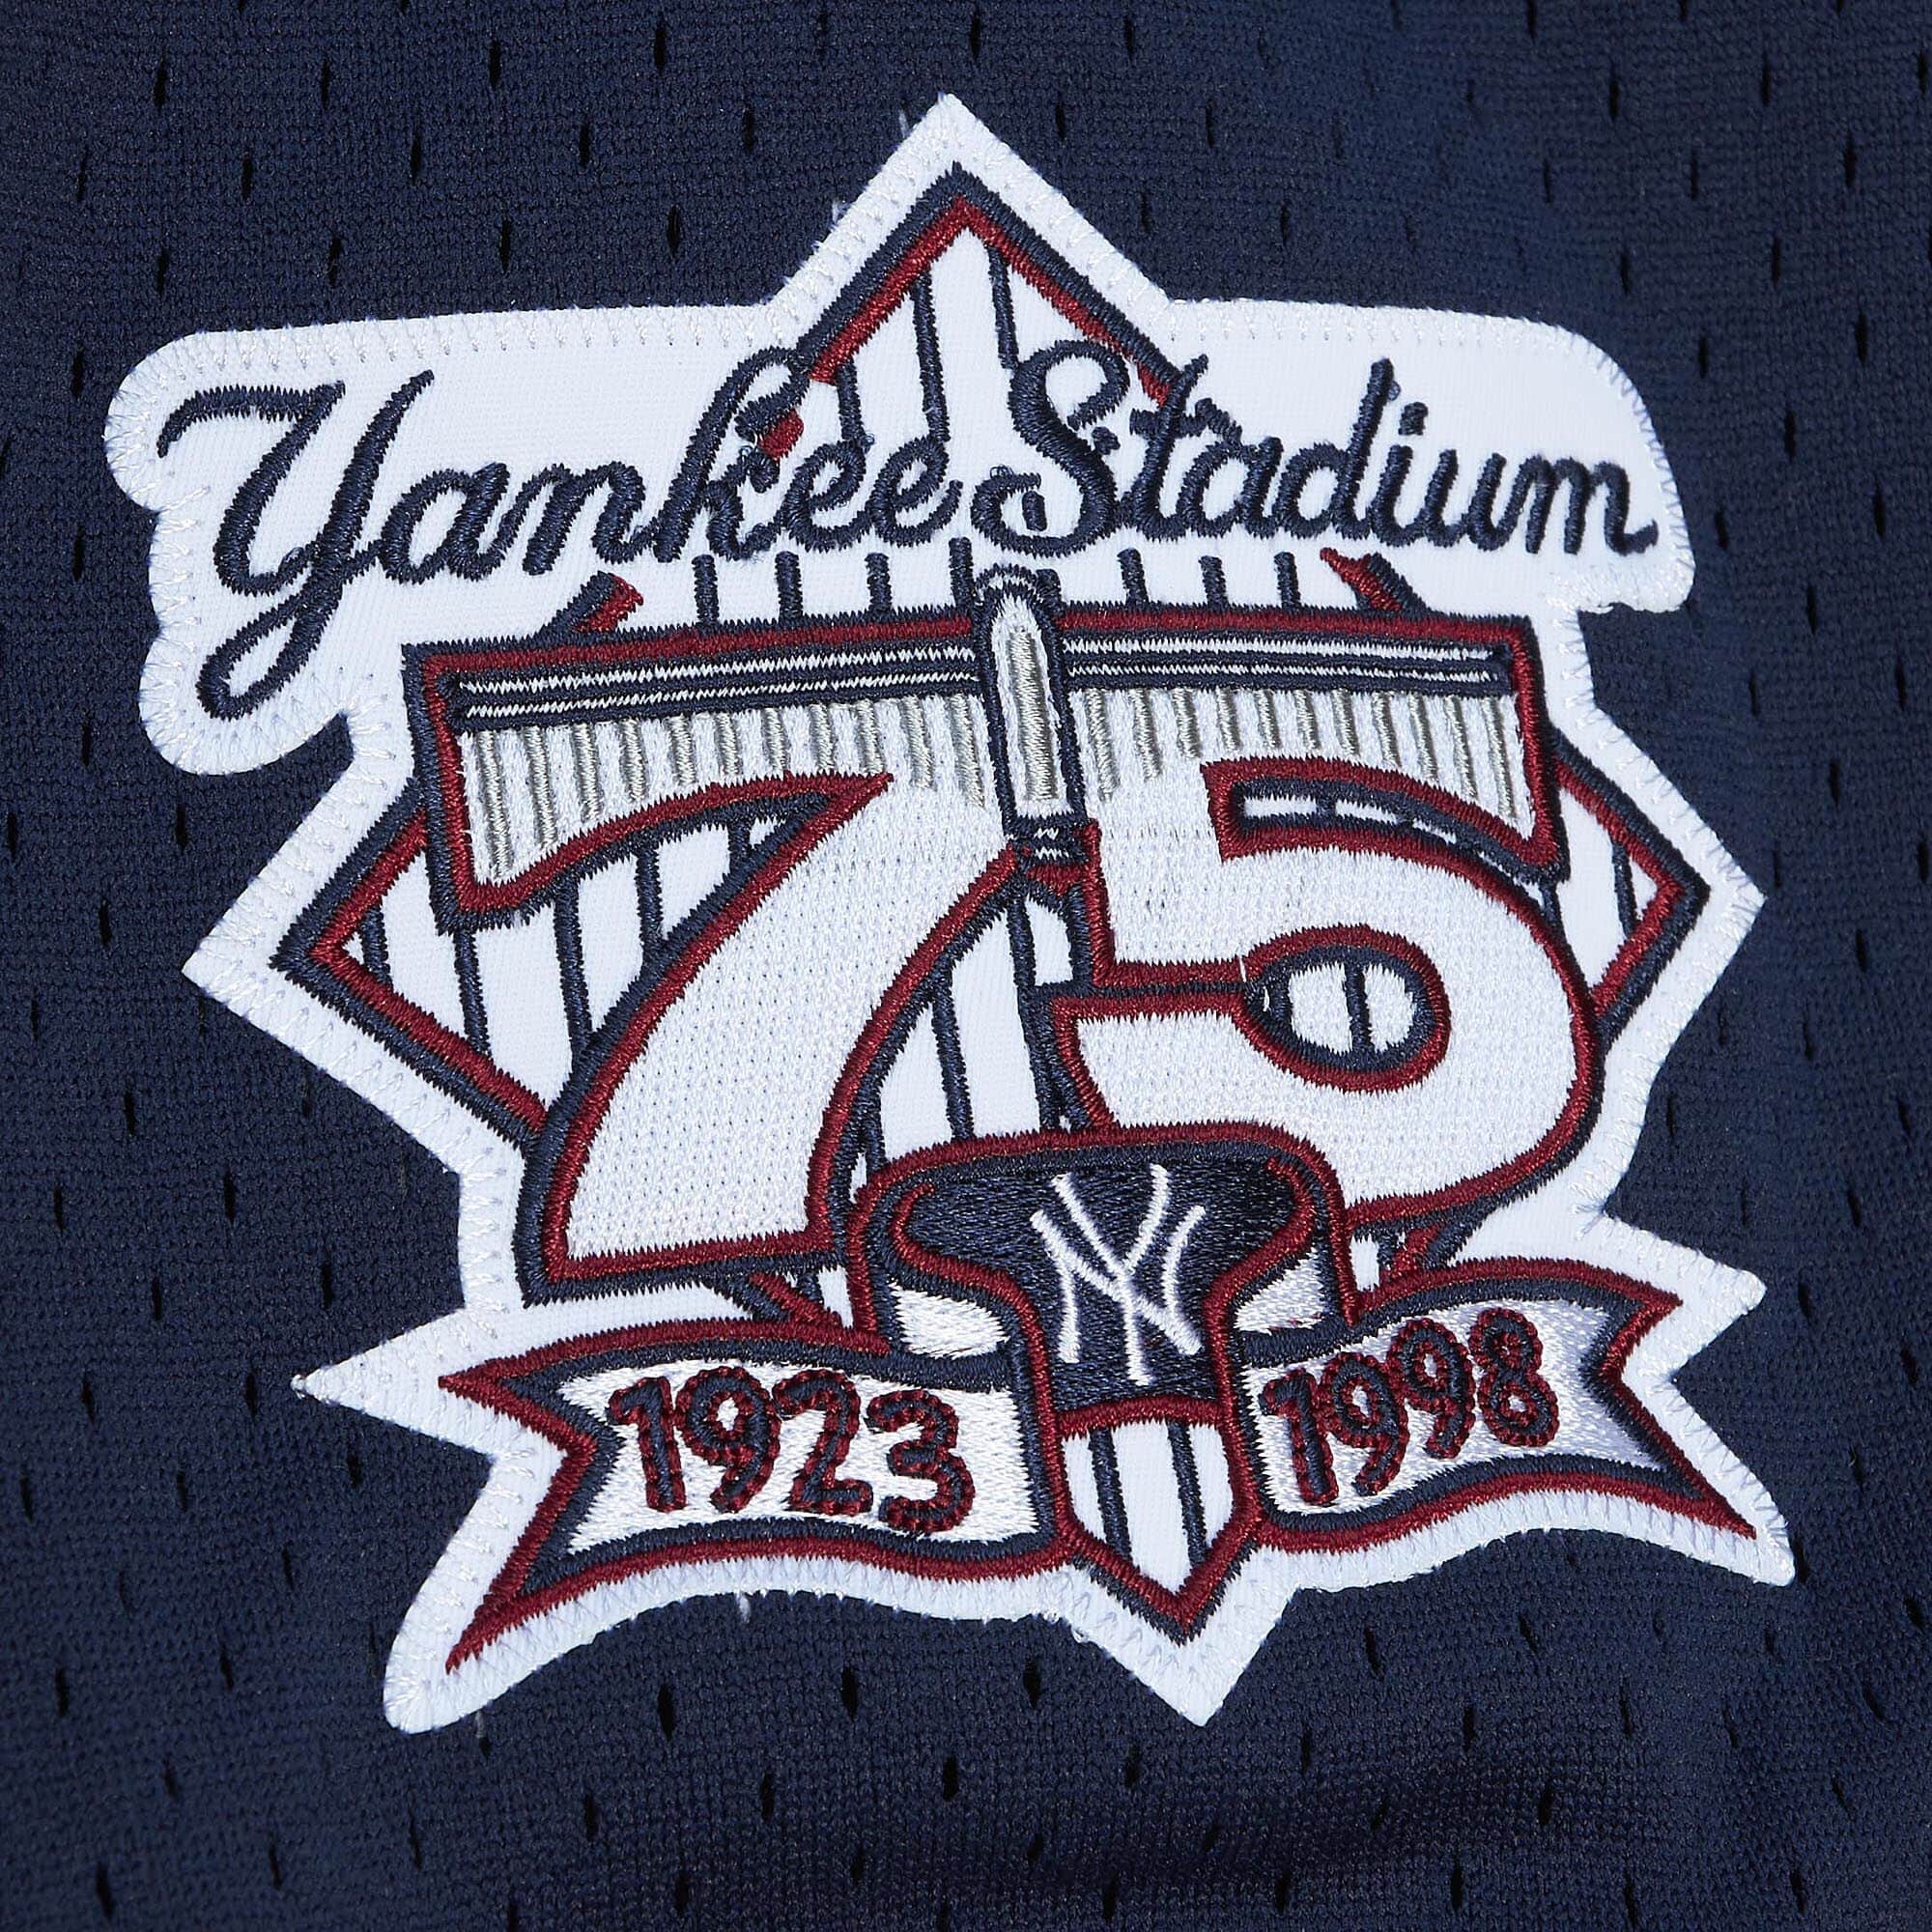 New york yankees batting practice jersey